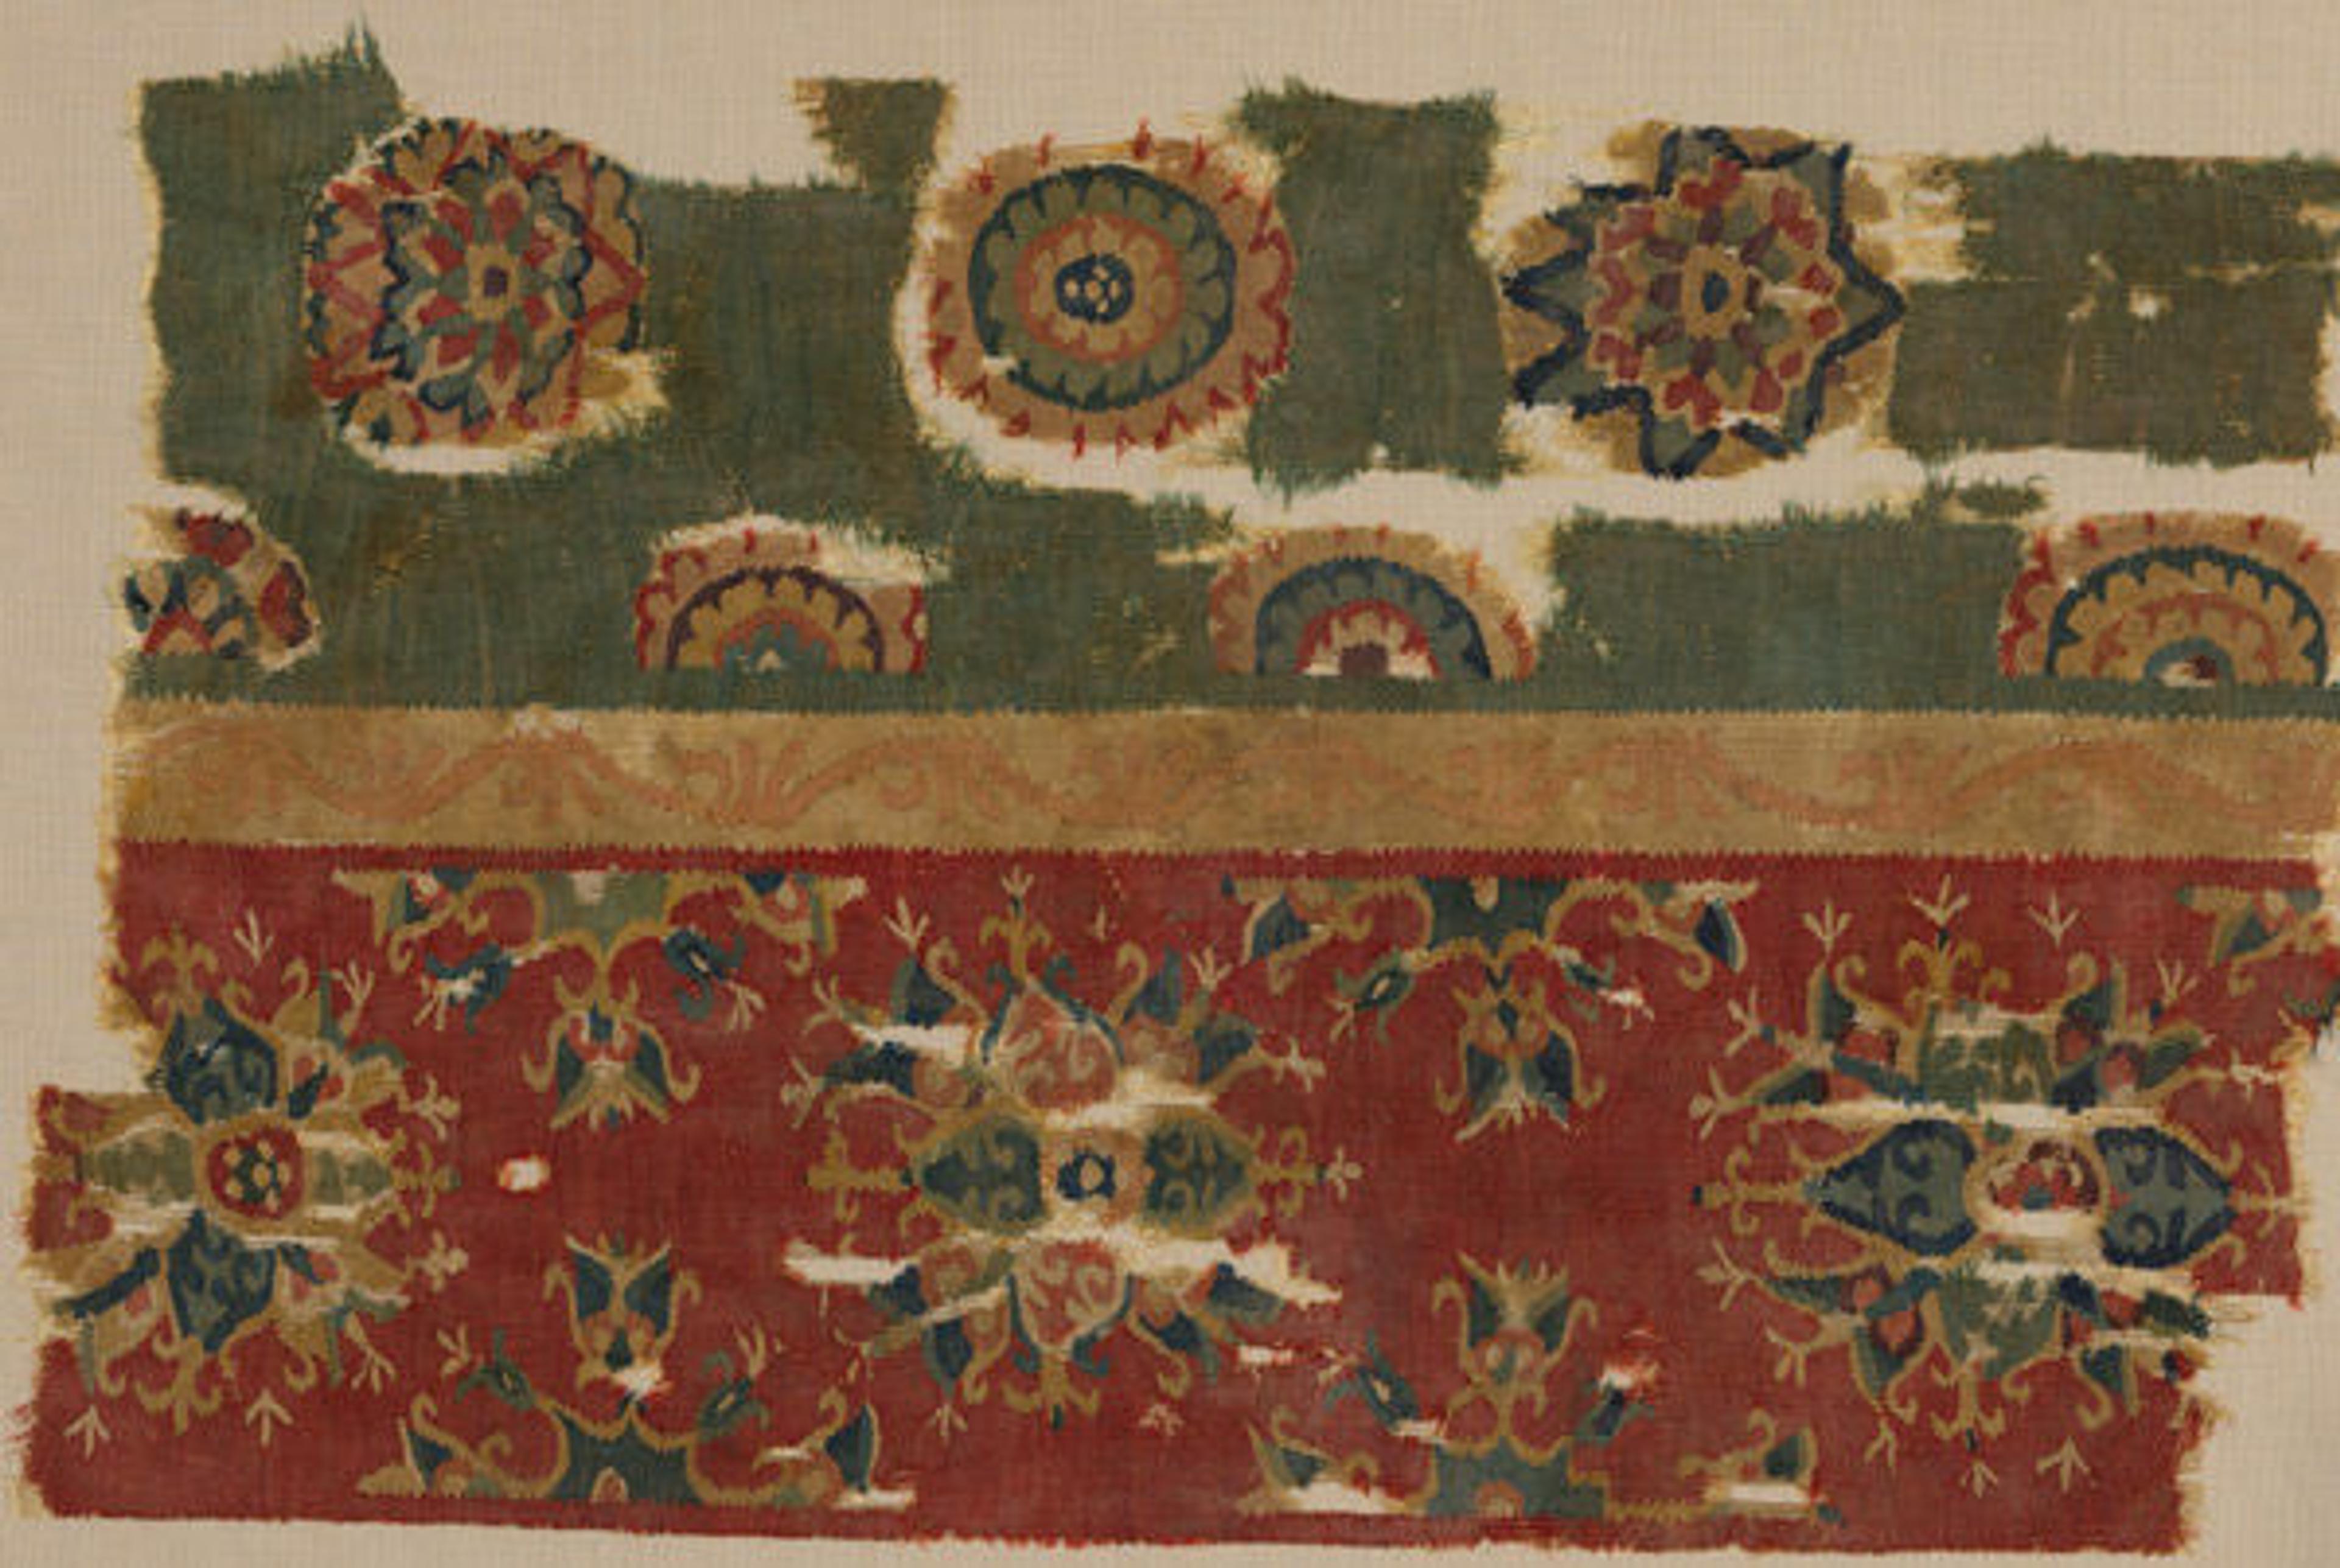 Woven tapestry fragment